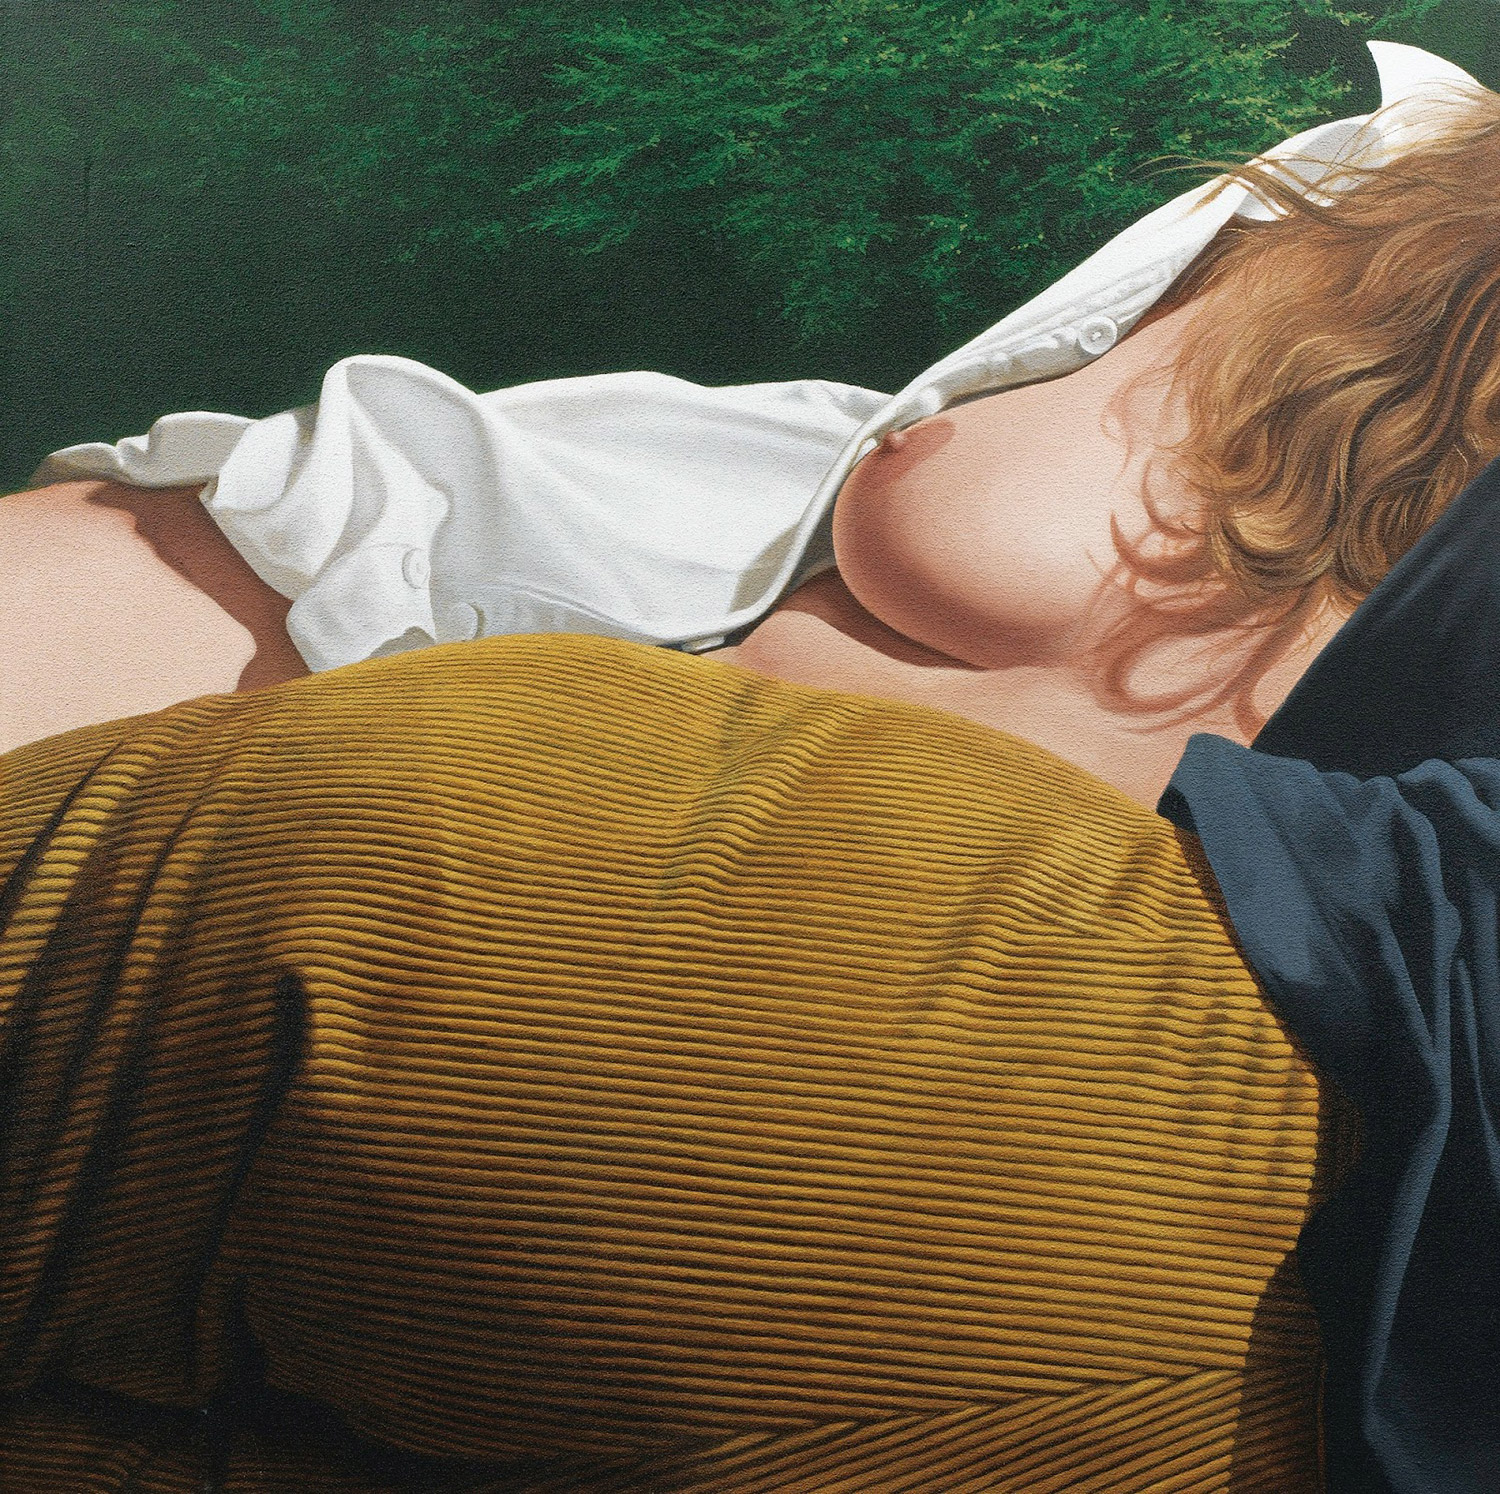 Gerard Schlosser - intimate figures lying side by side